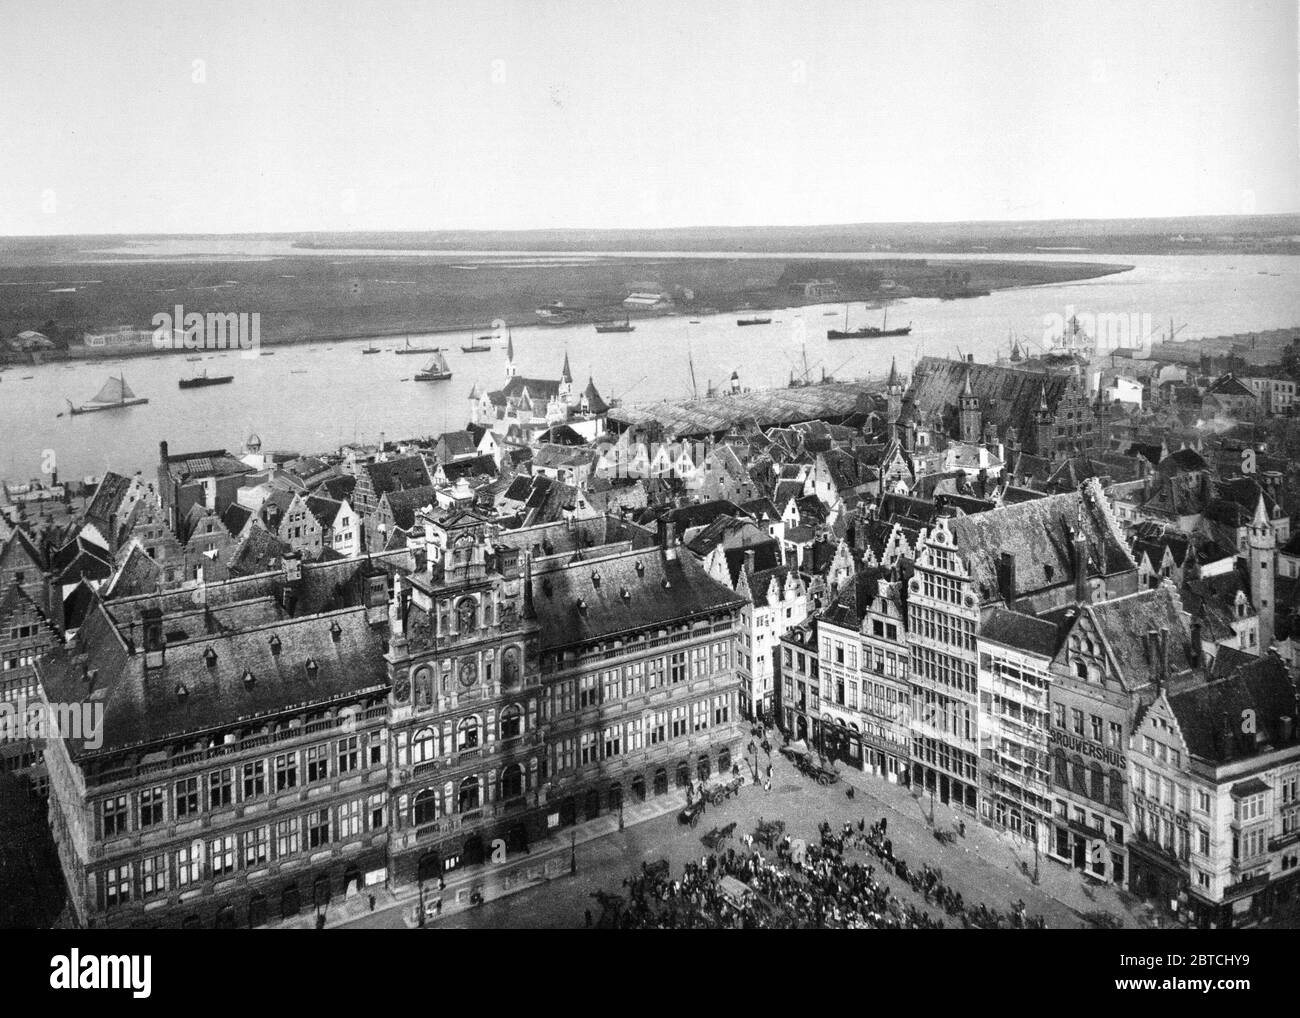 General view, I, Antwerp, Belgium ca. 1890-1900 Stock Photo